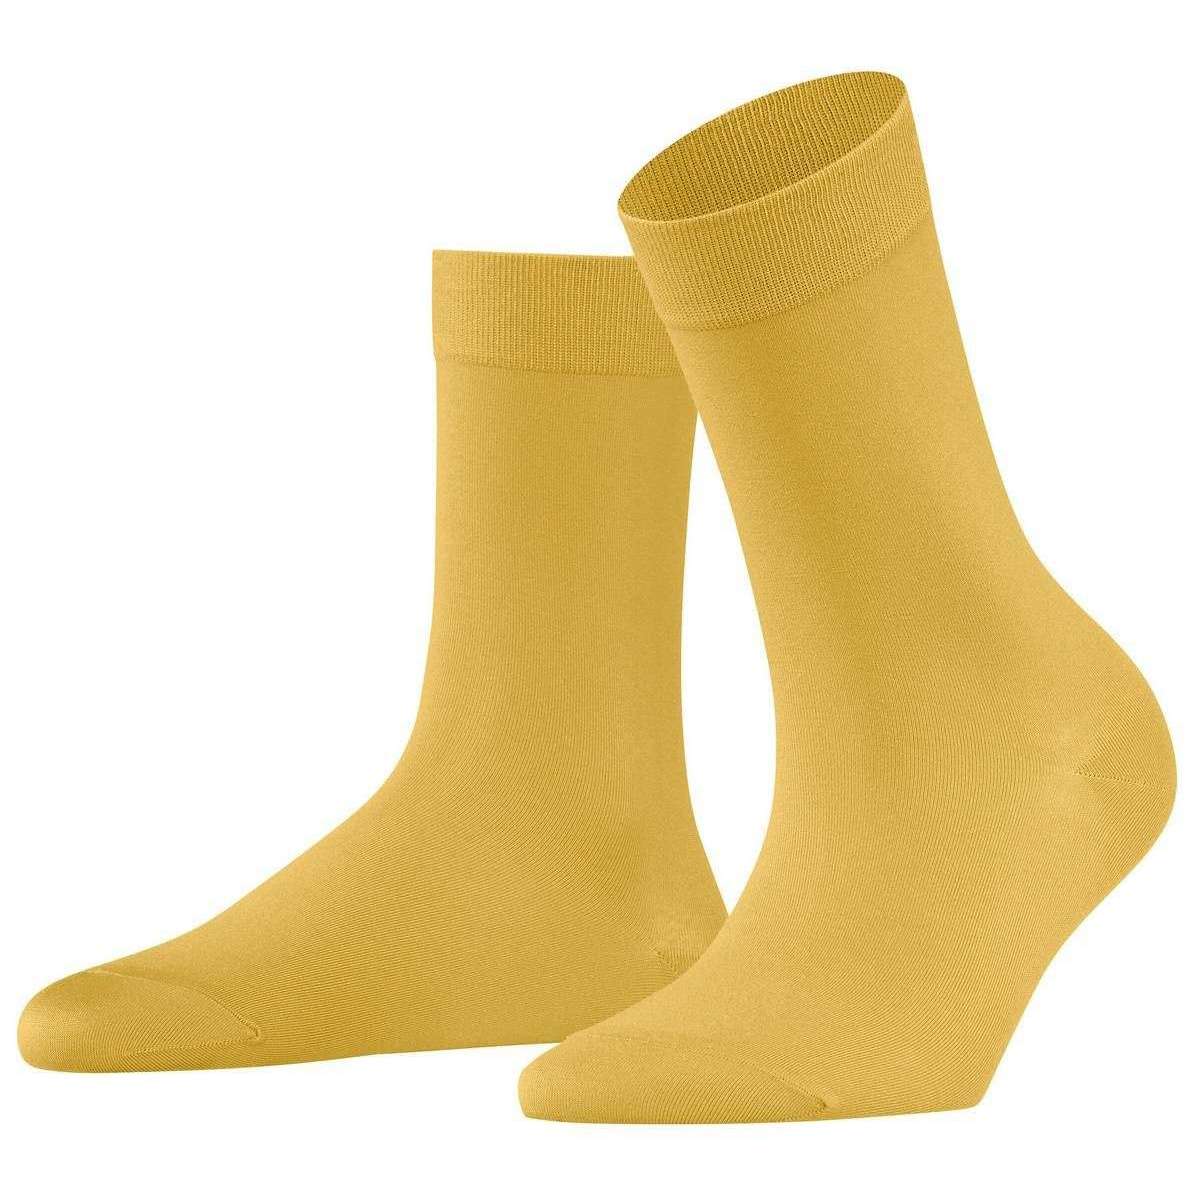 Falke Cotton Touch Socks - Mustard Yellow